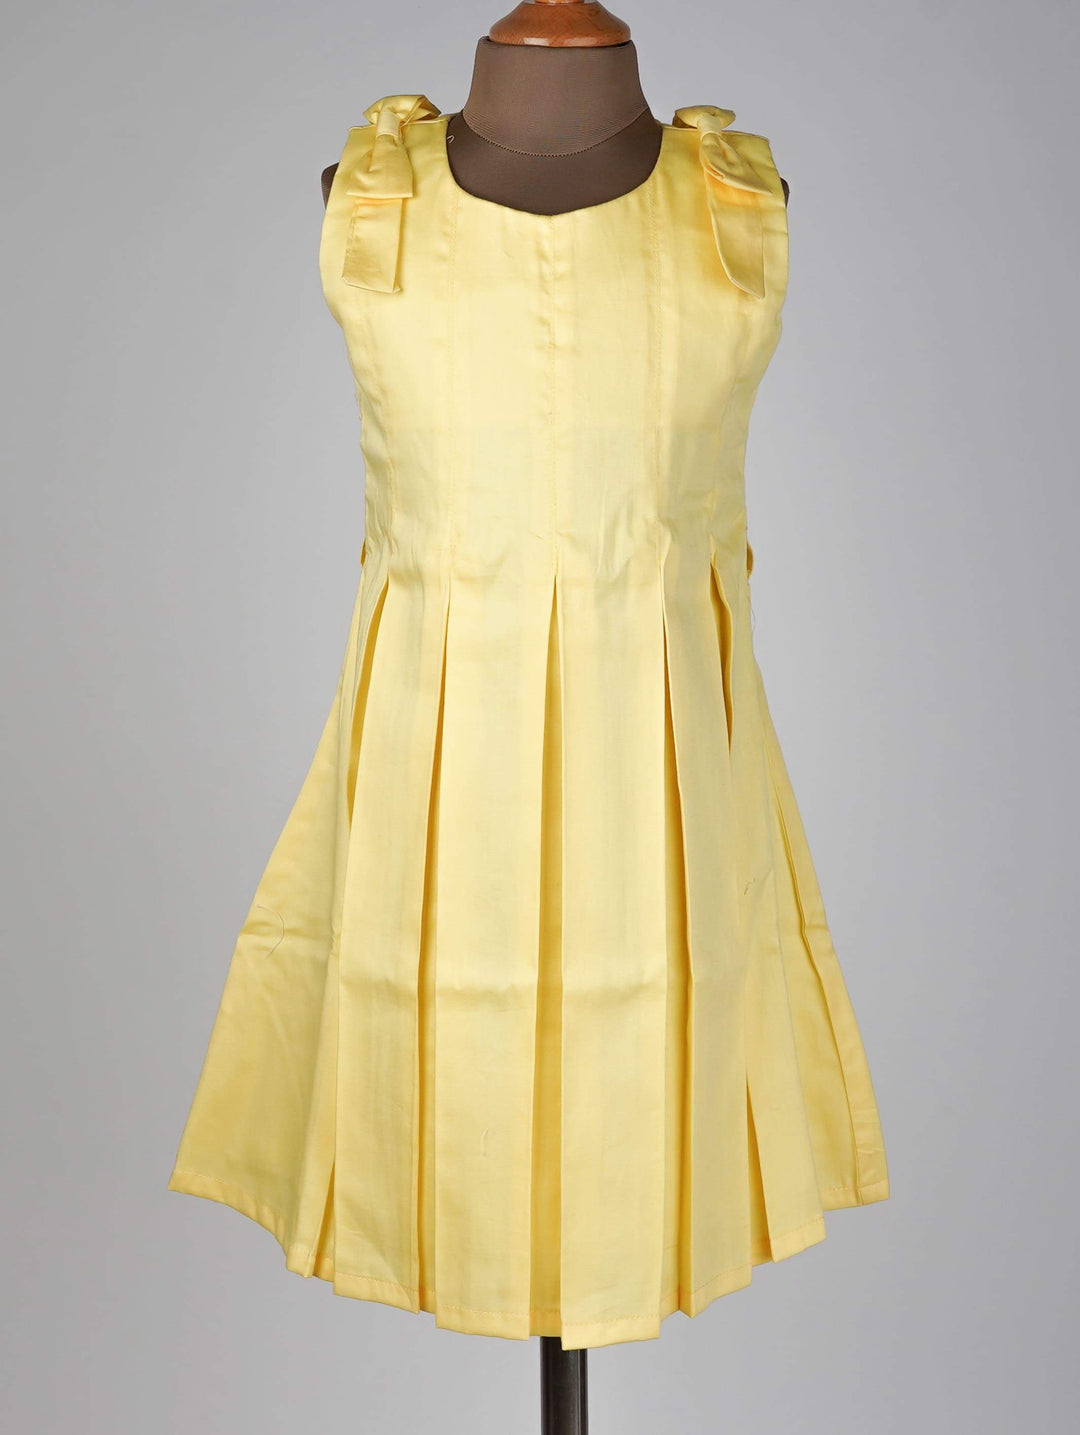 The Nesavu Frocks & Dresses Minimalistic Yellow Cotton Dress With Bow and Box Pleat Details psr silks Nesavu 16 (1Y-2Y) / yellow GFC327